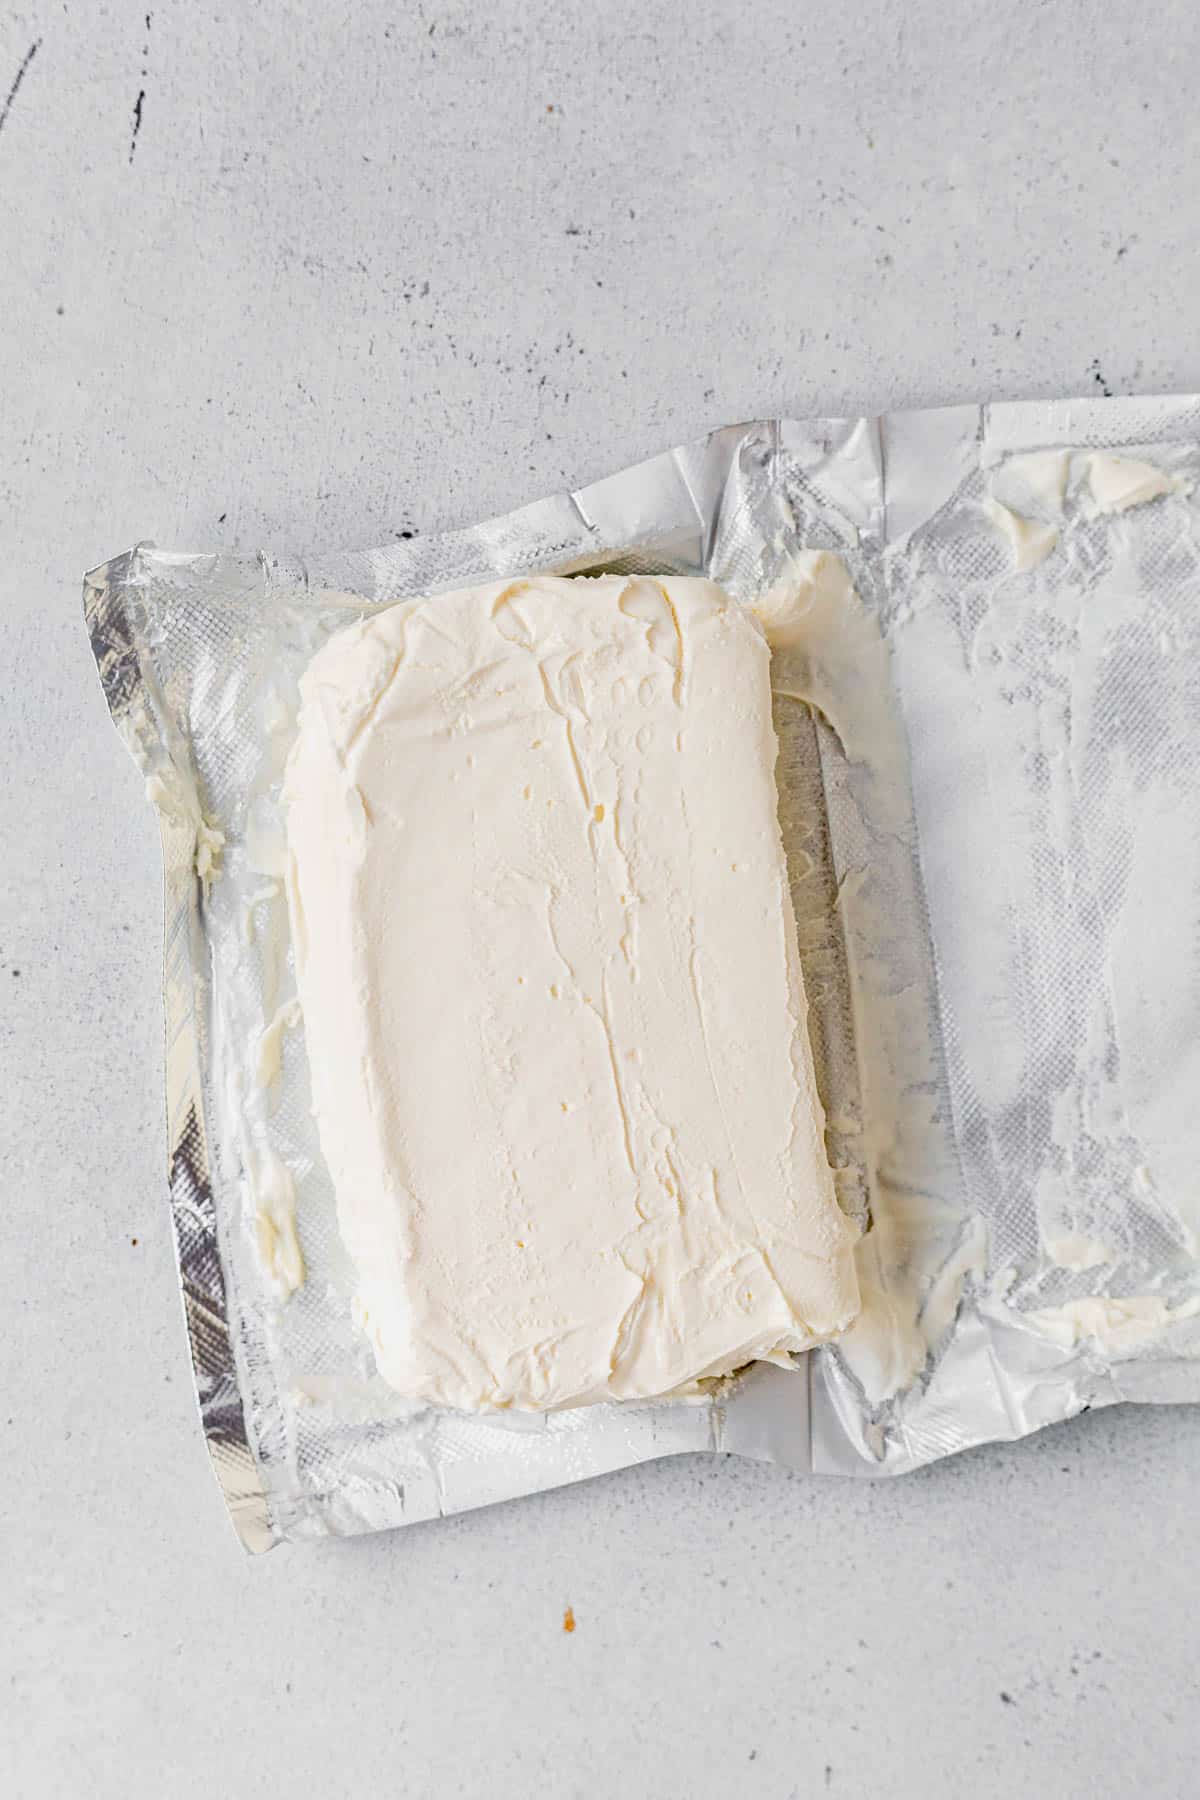 a block of cream cheese on a countertop